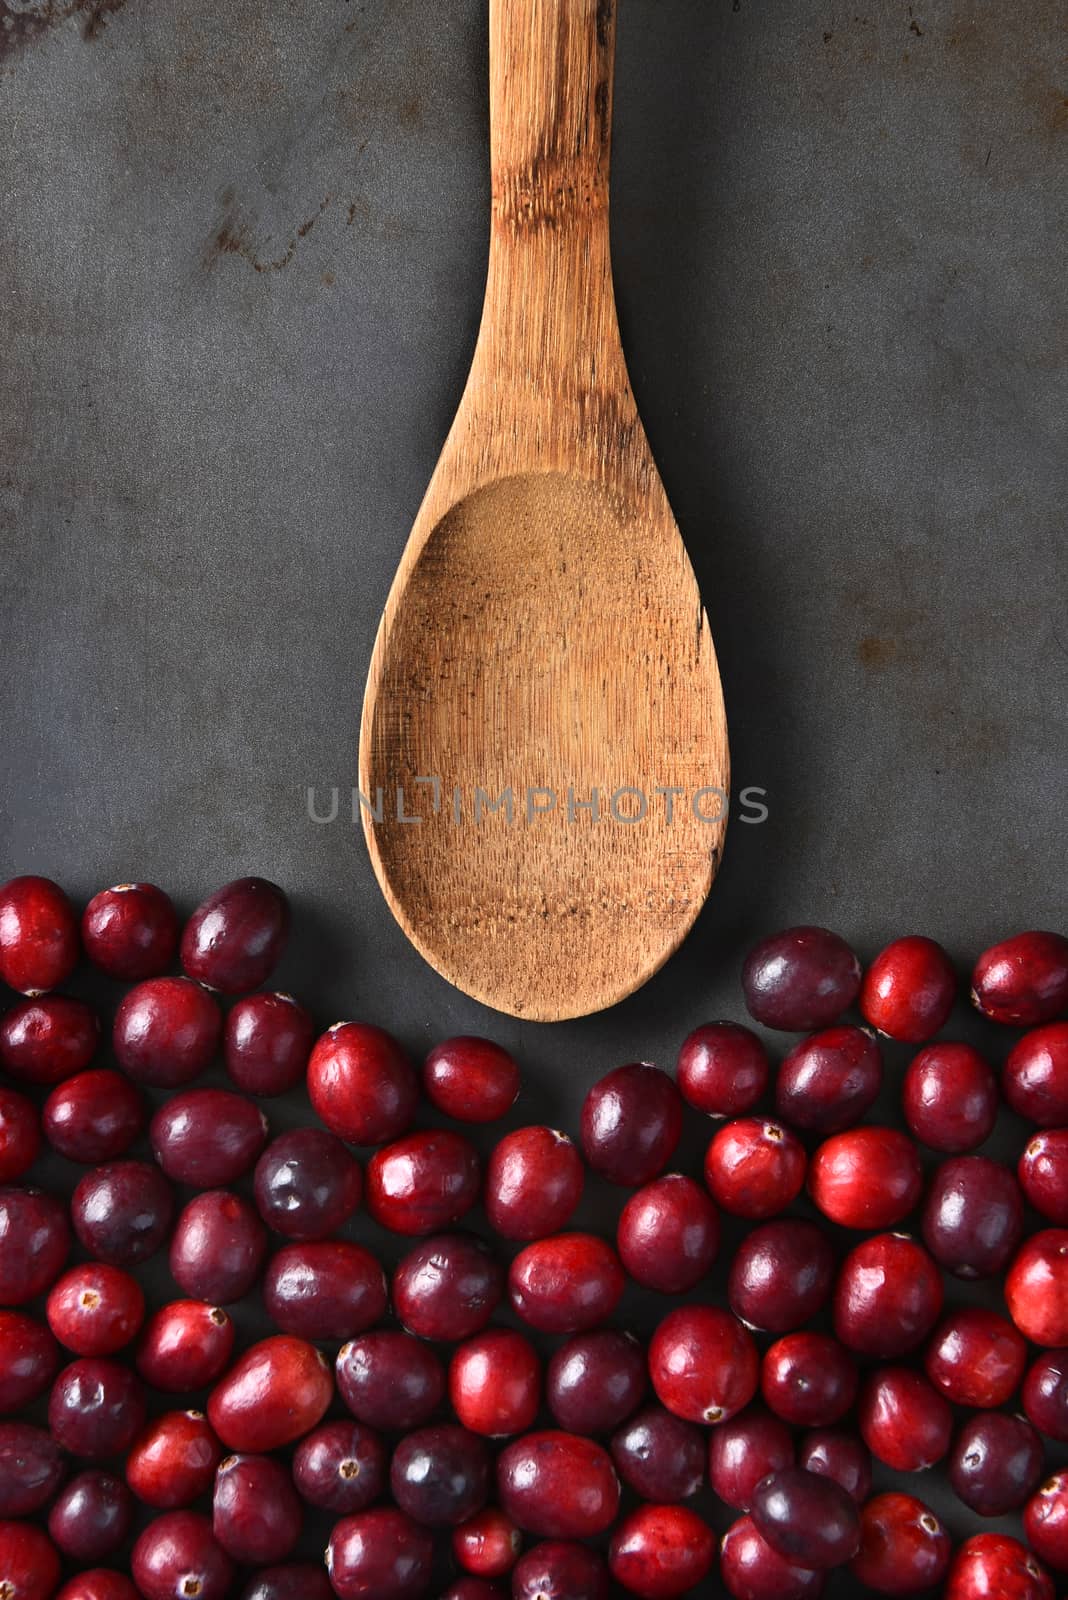 Cranberries Wood Spoon Baking Sheet by sCukrov